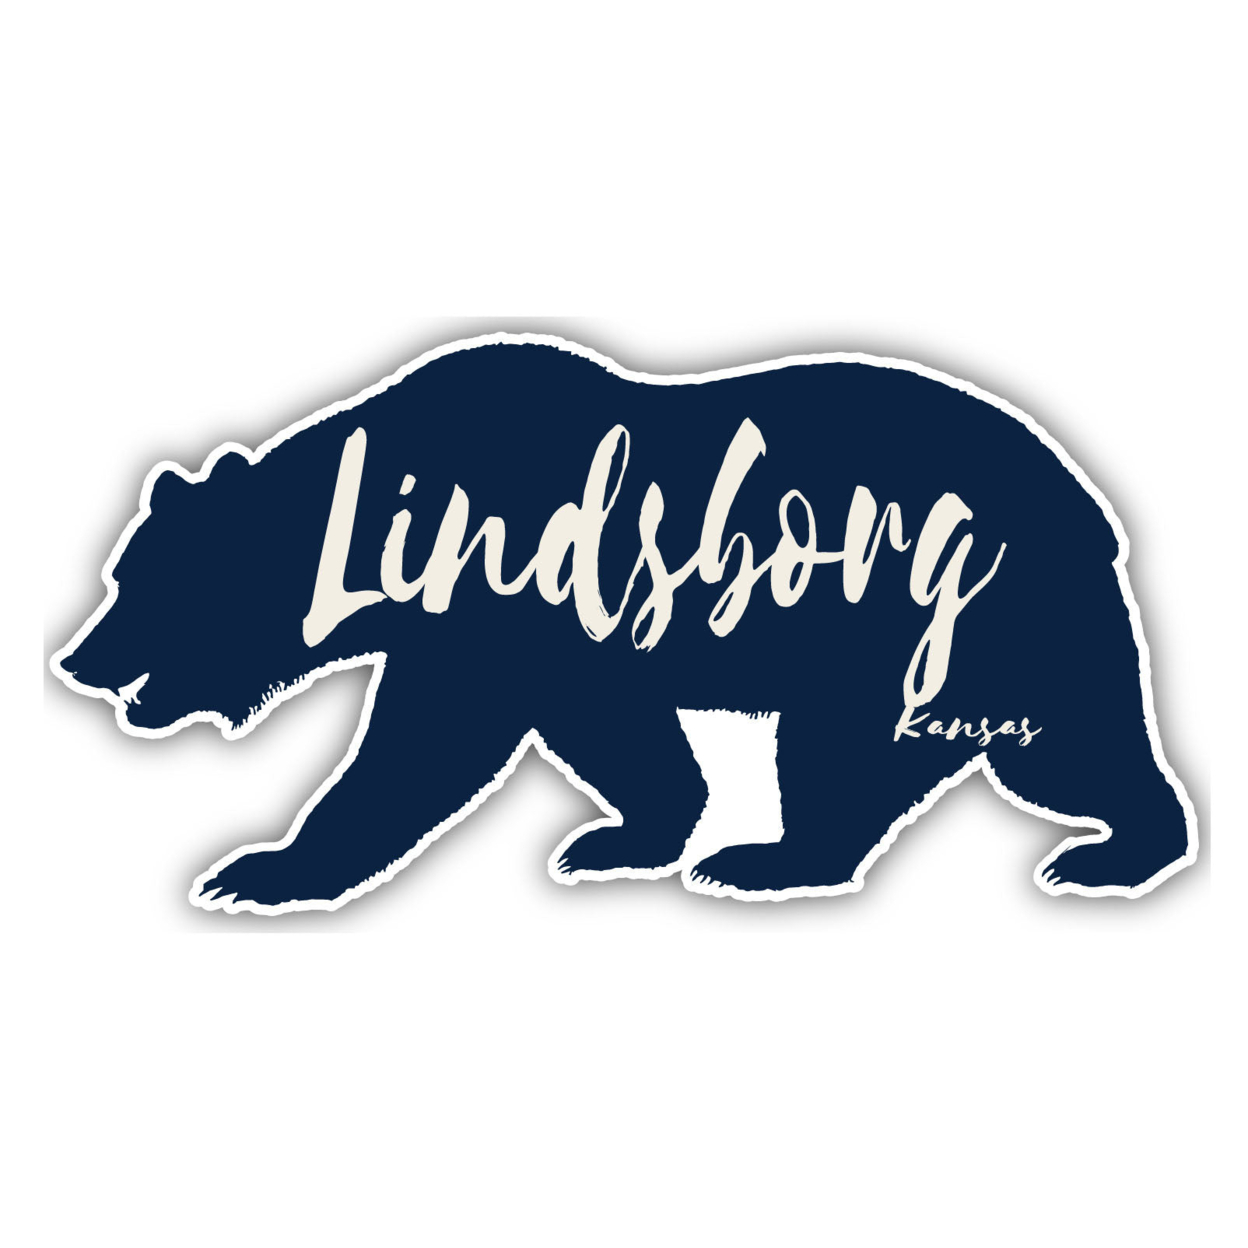 Lindsborg Kansas Souvenir Decorative Stickers (Choose Theme And Size) - 2-Inch, Bear